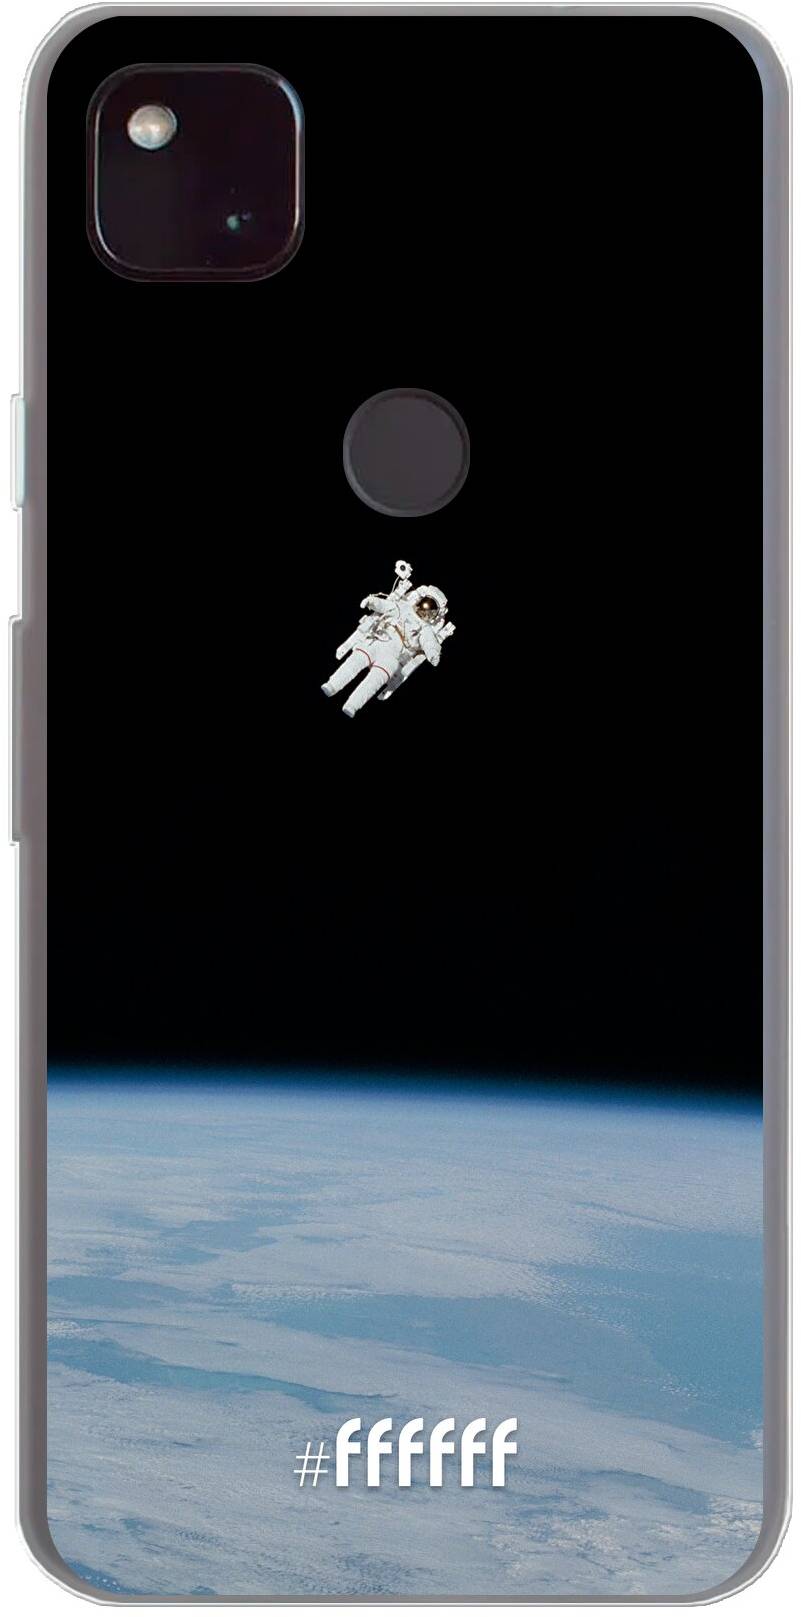 Spacewalk Pixel 4a 5G